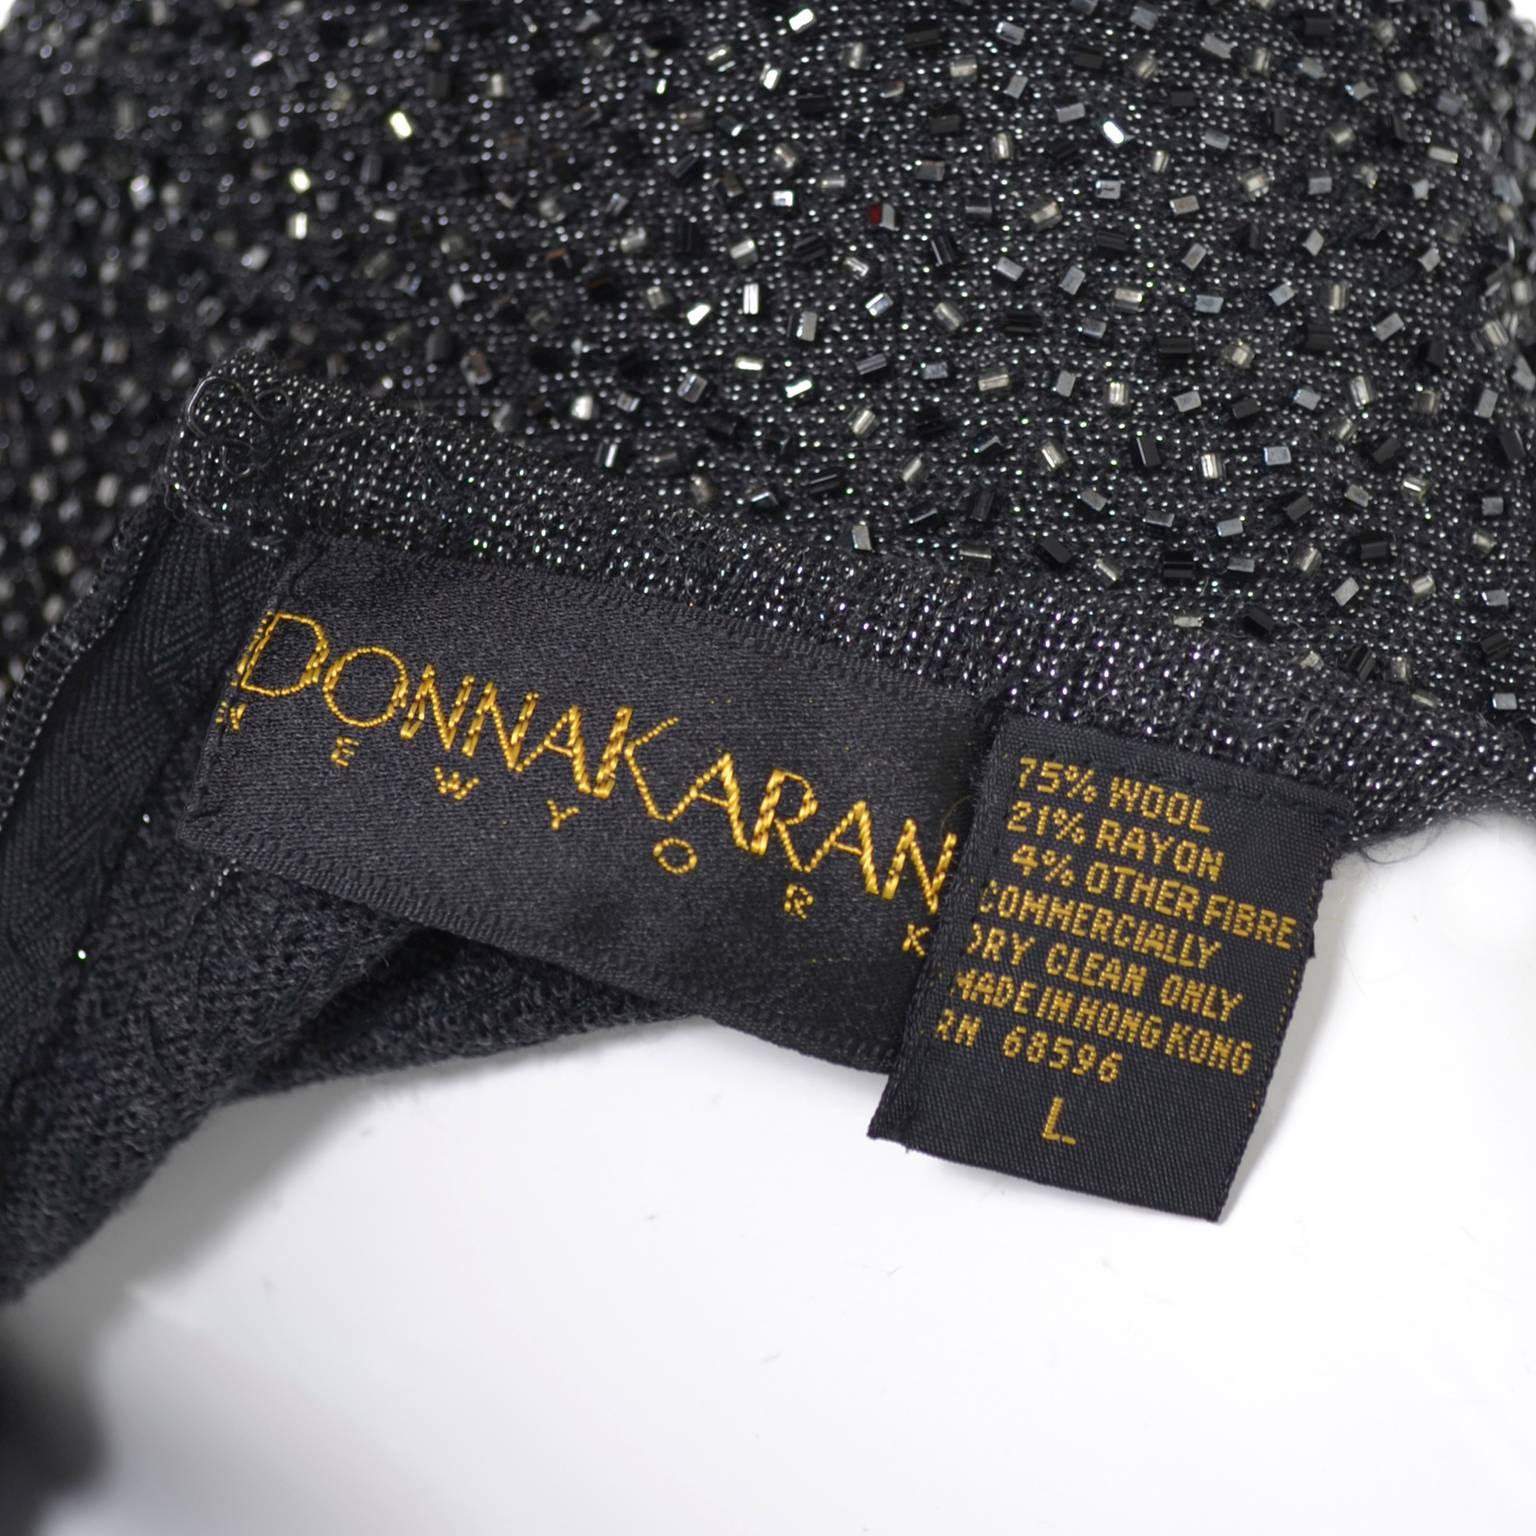 donna karan black label